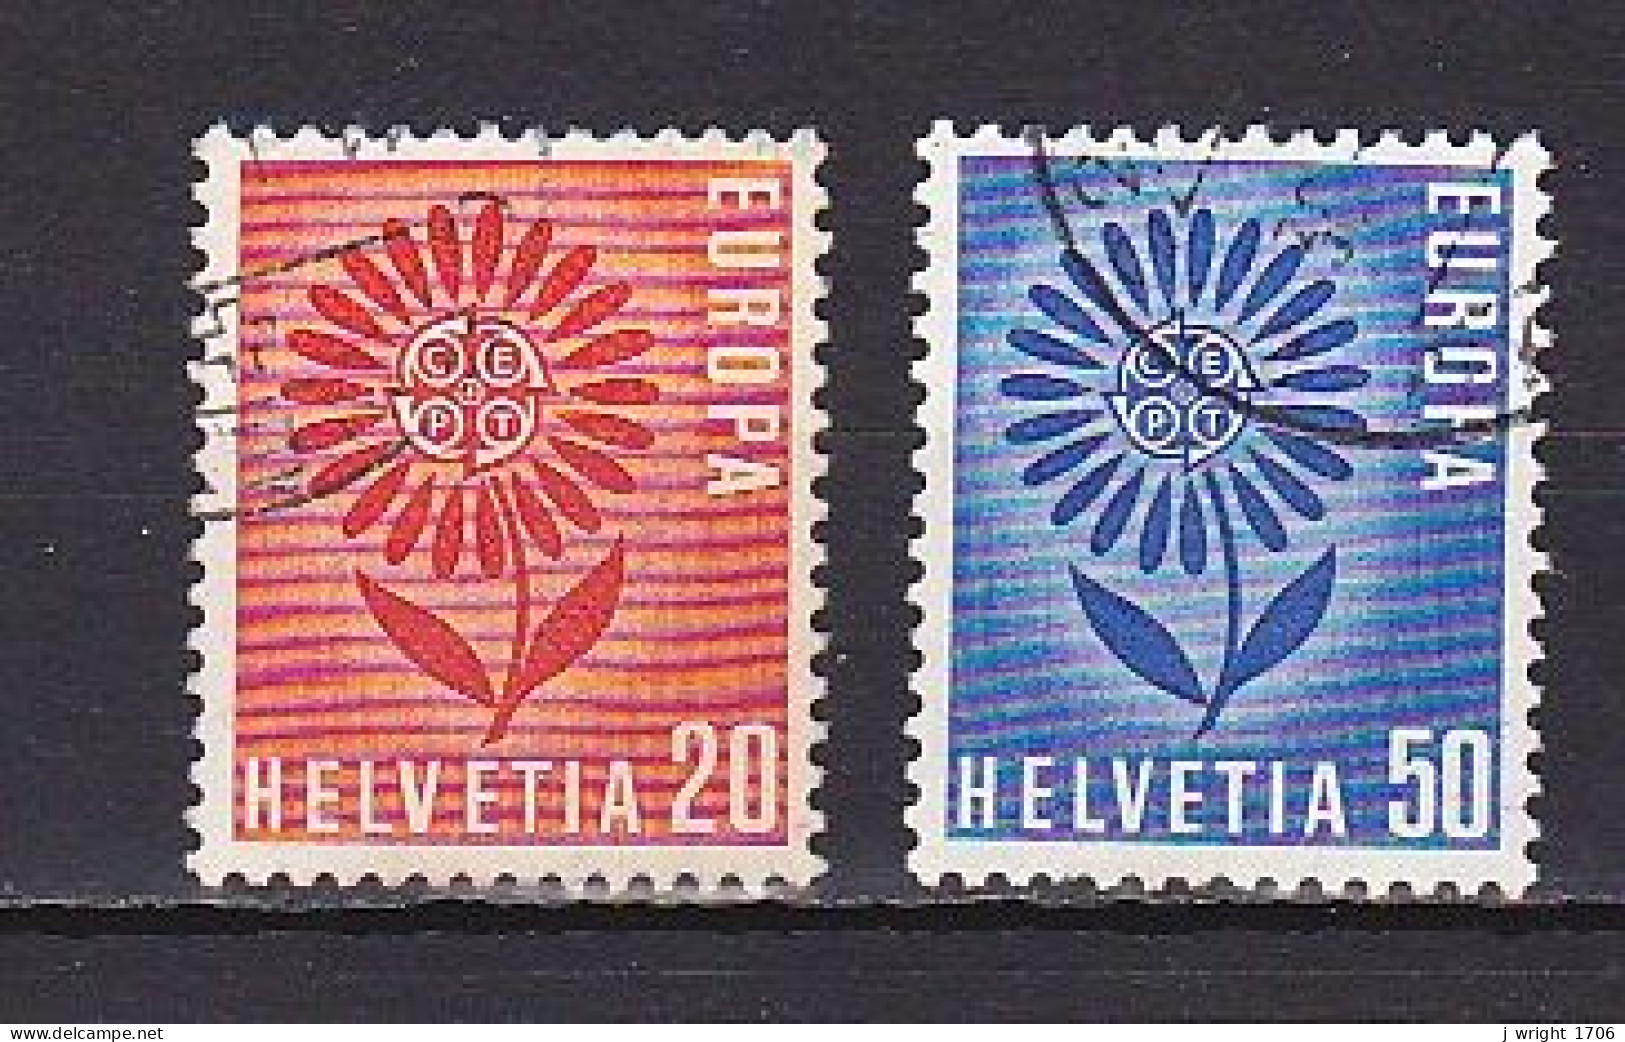 Switzerland, 1964, Europa CEPT, Set, USED - Oblitérés